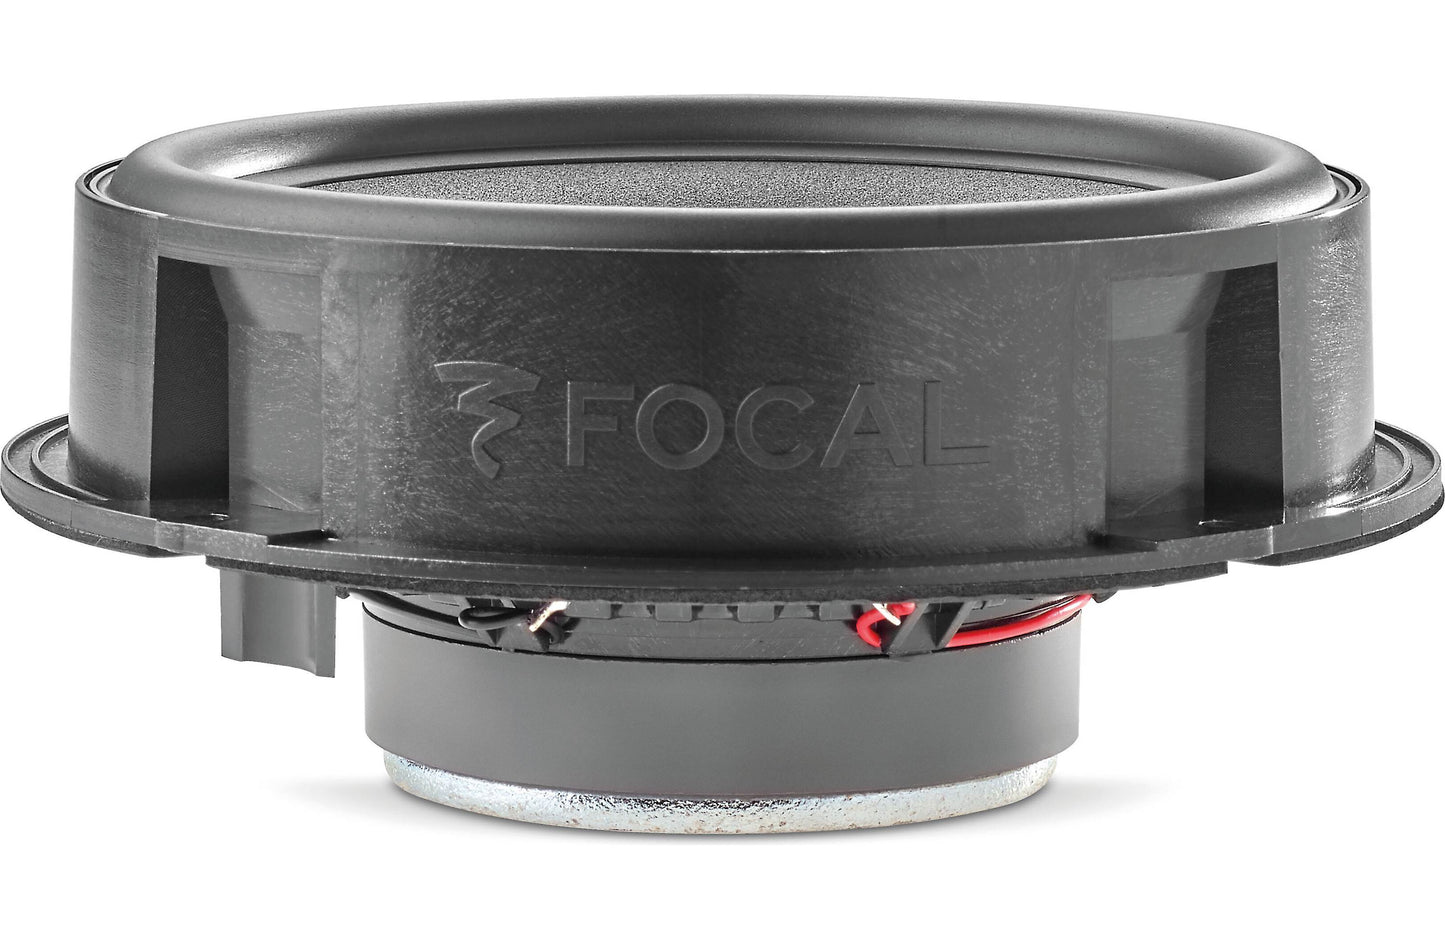 Focal Inside IS VW 165 6-1/2" component speaker system for select Volkswagen vehicles